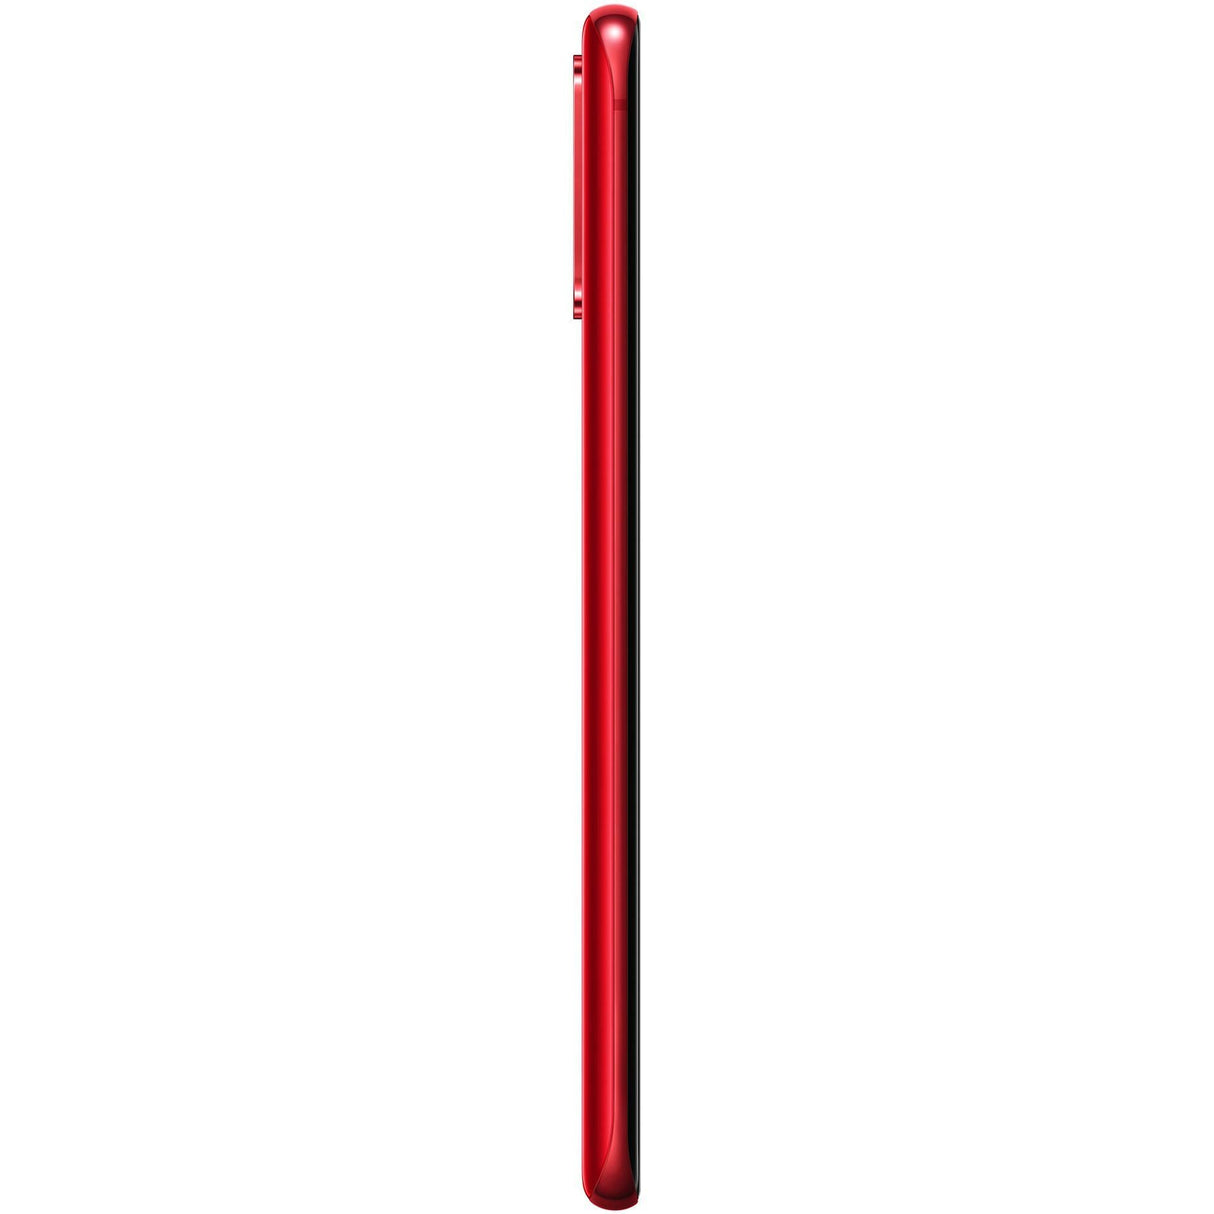 Samsung Galaxy S20 Plus 5G 128GB Aura Red Unlocked Single SIM - Excellent Condition